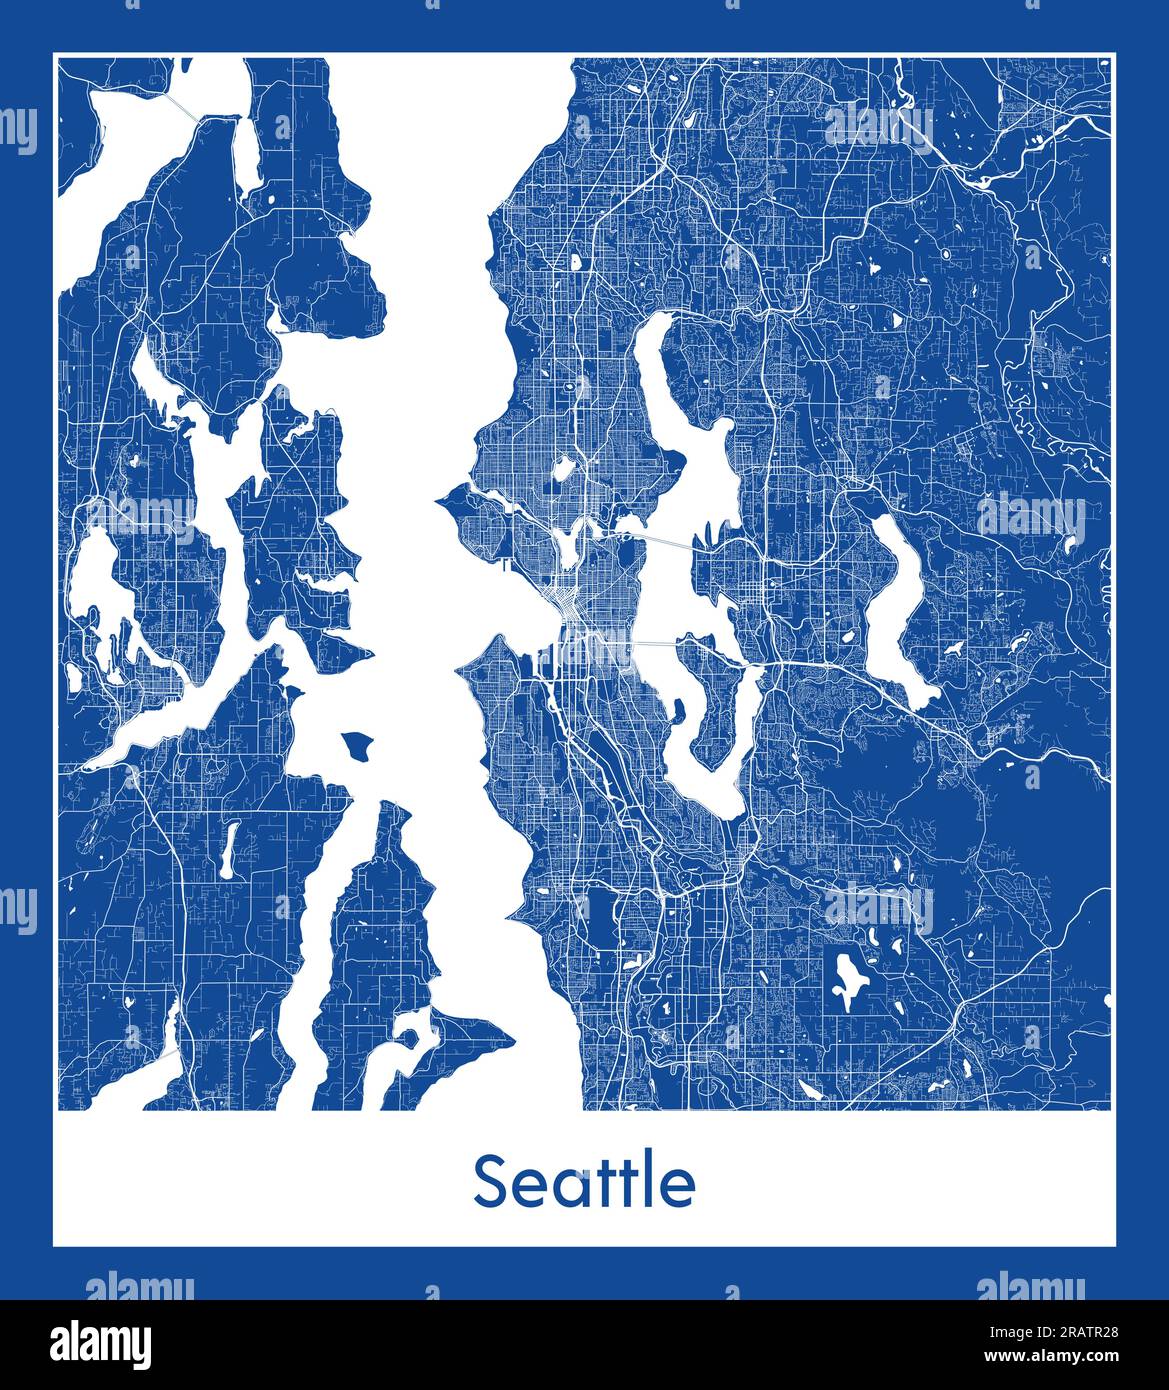 Seattle United States North America City Karte blau gedruckt Vektordarstellung Stock Vektor